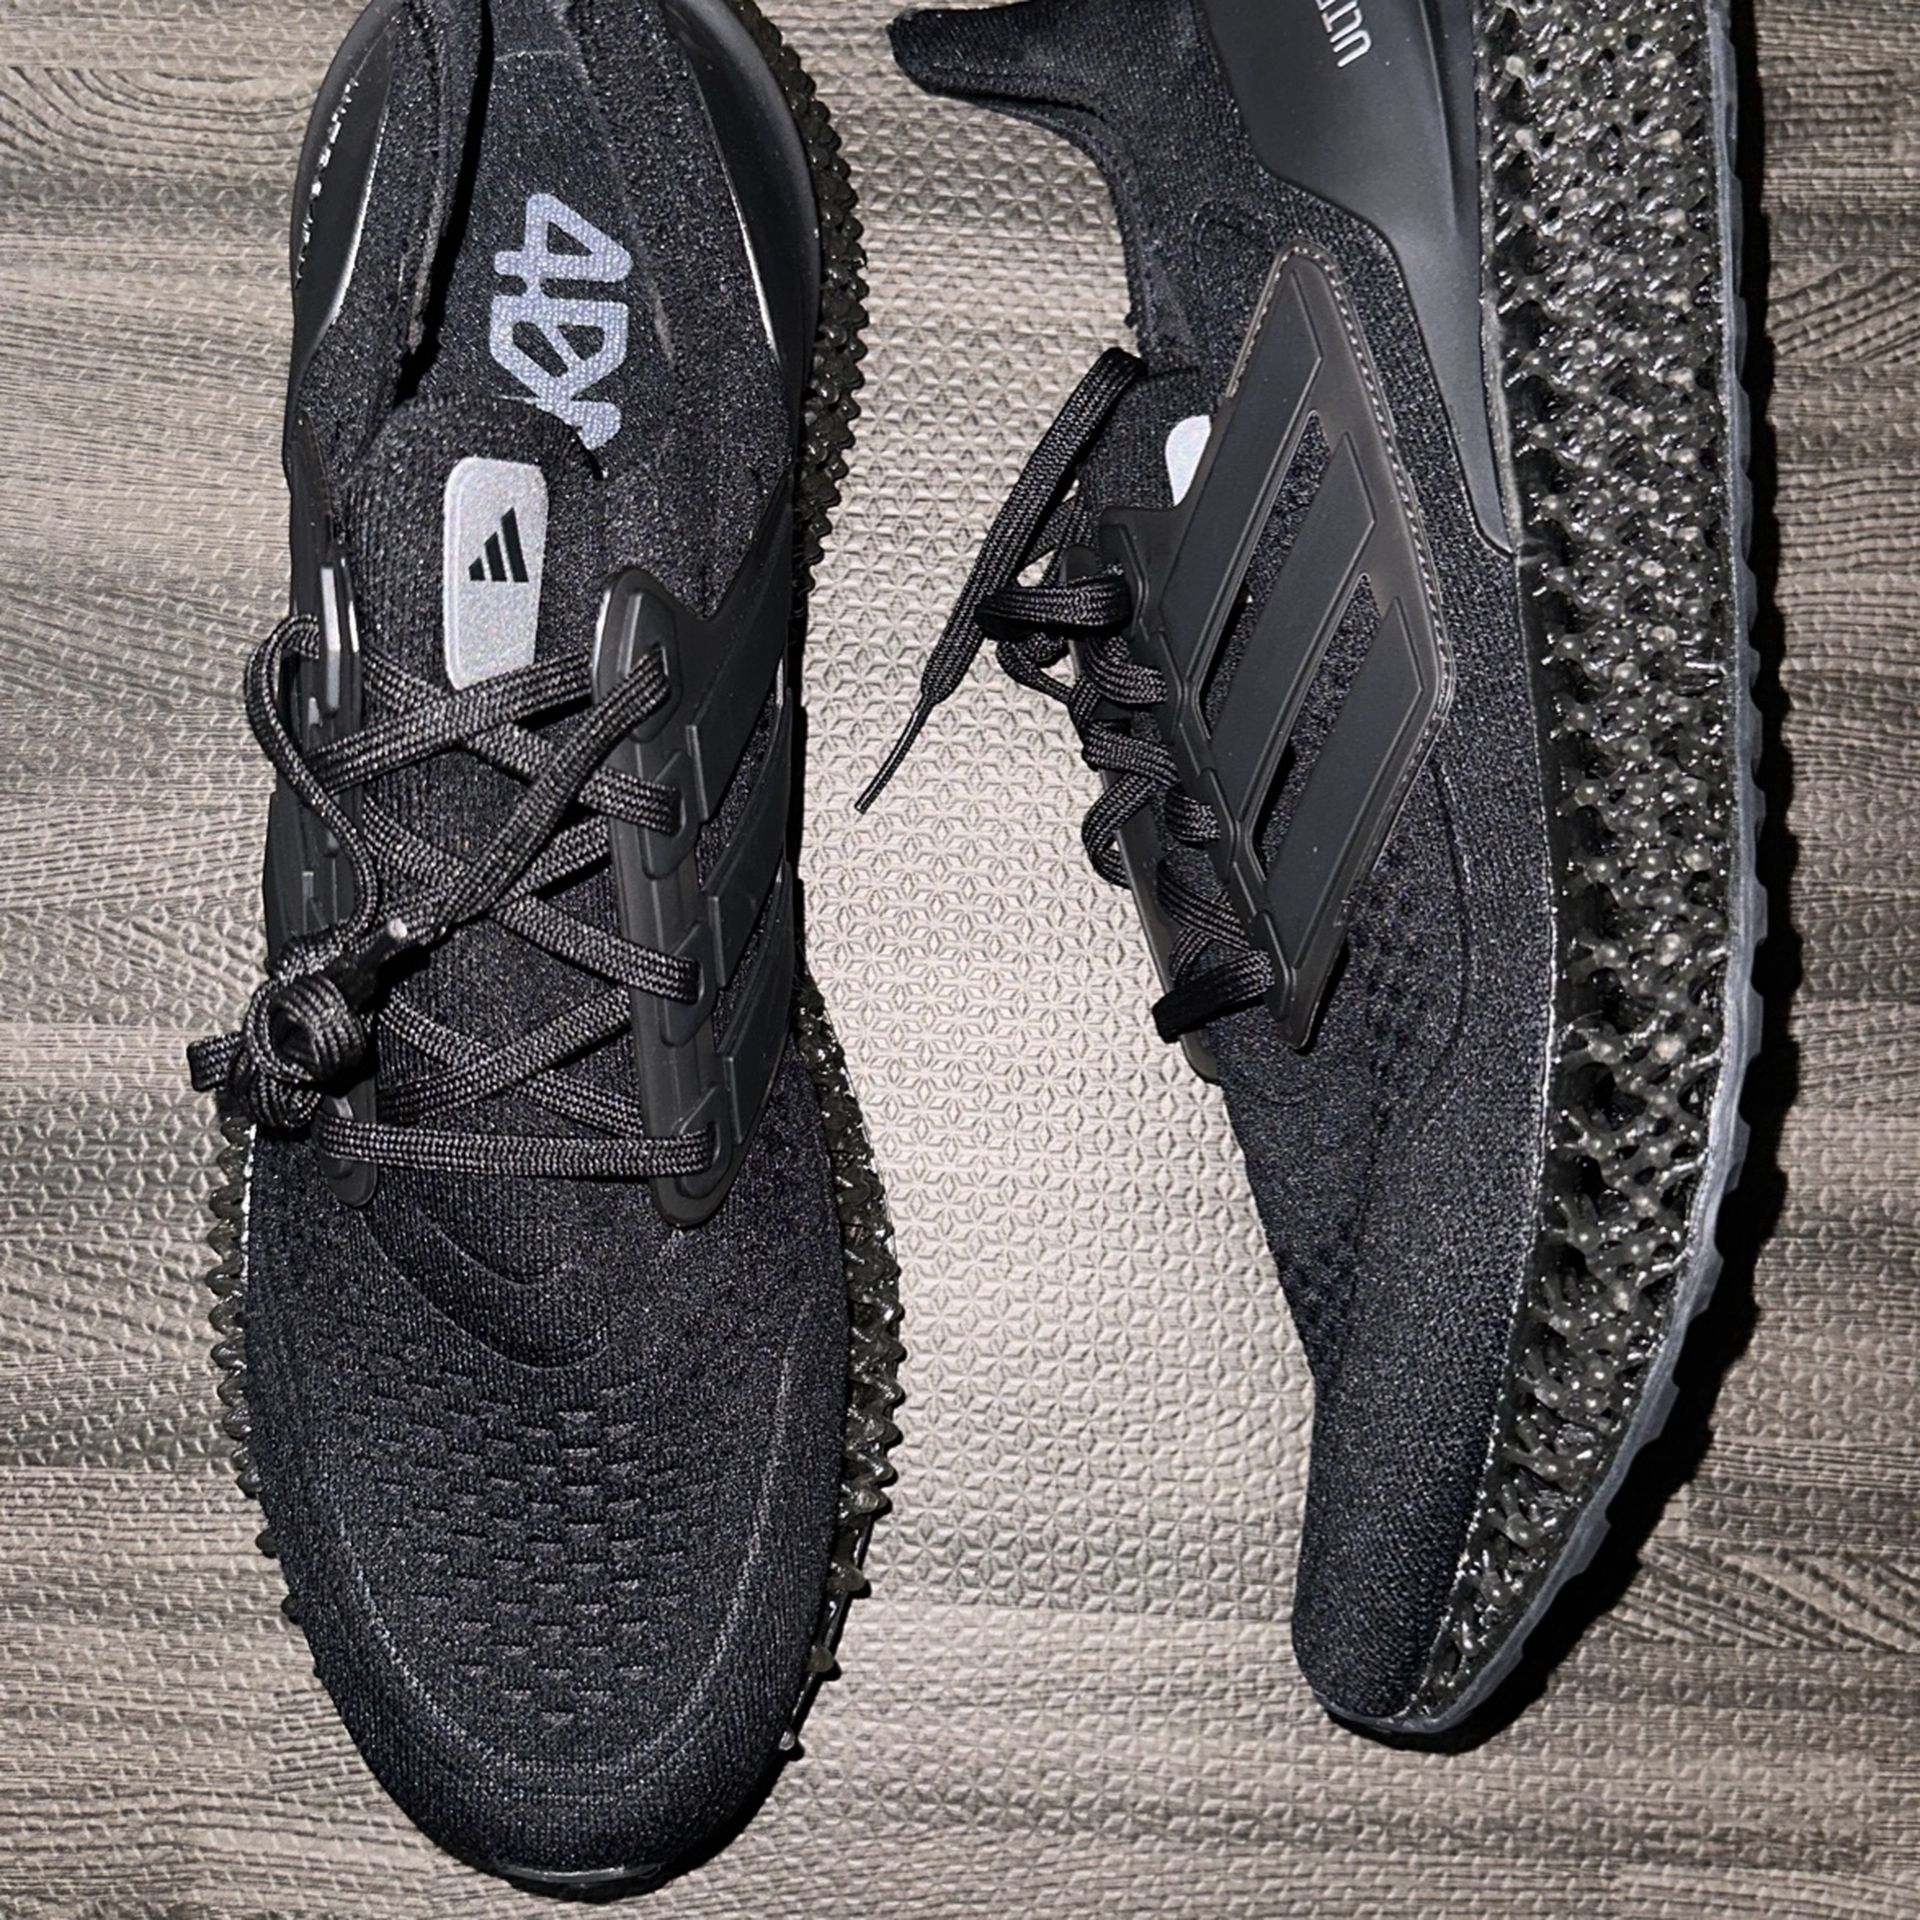 Adidas 4DFWD “Black Carbon” Size 11.5 Brand New